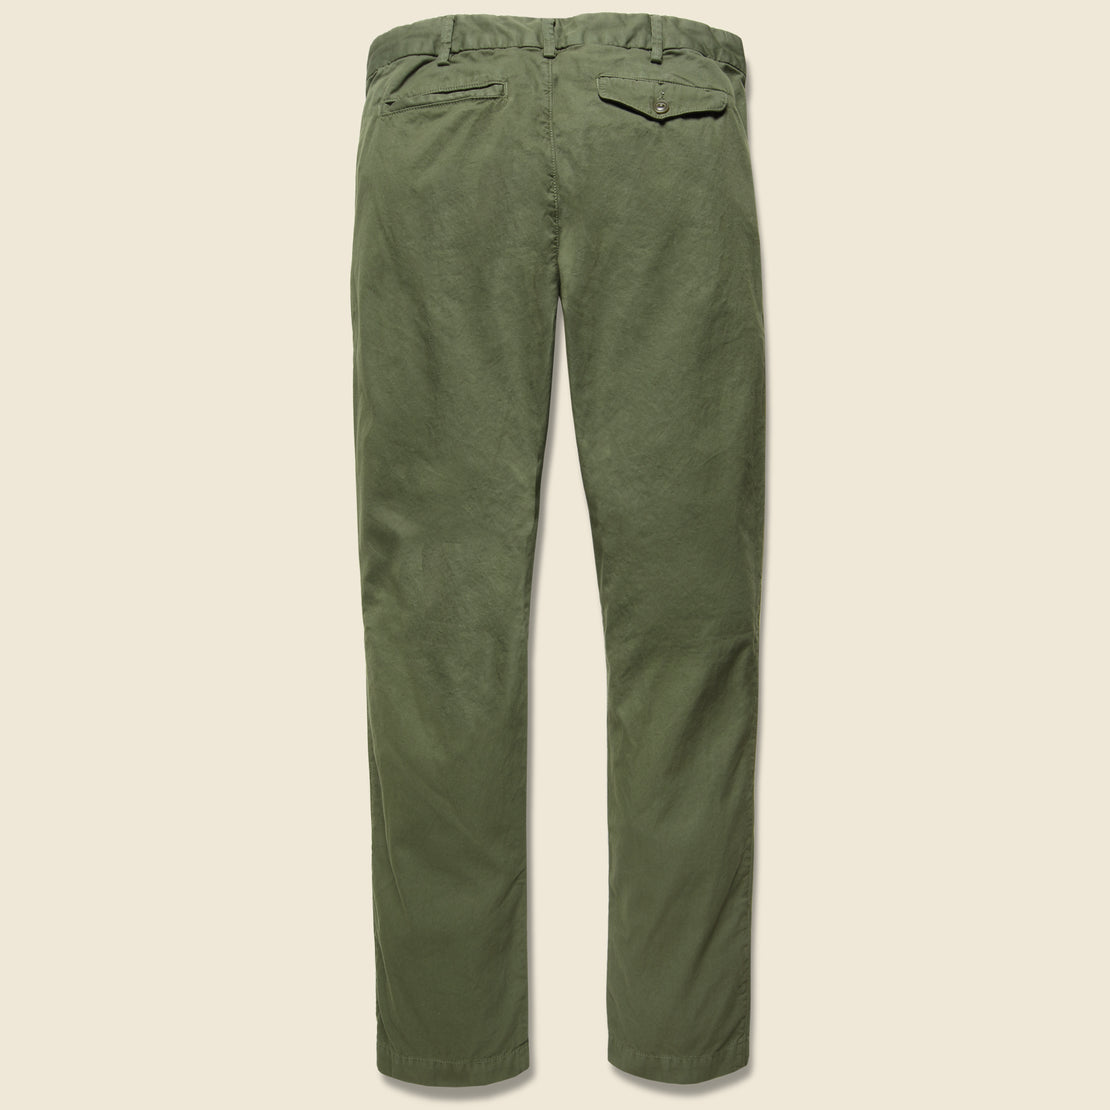 Light Twill Trouser - Olive Drab - Save Khaki - STAG Provisions - Pants - Twill